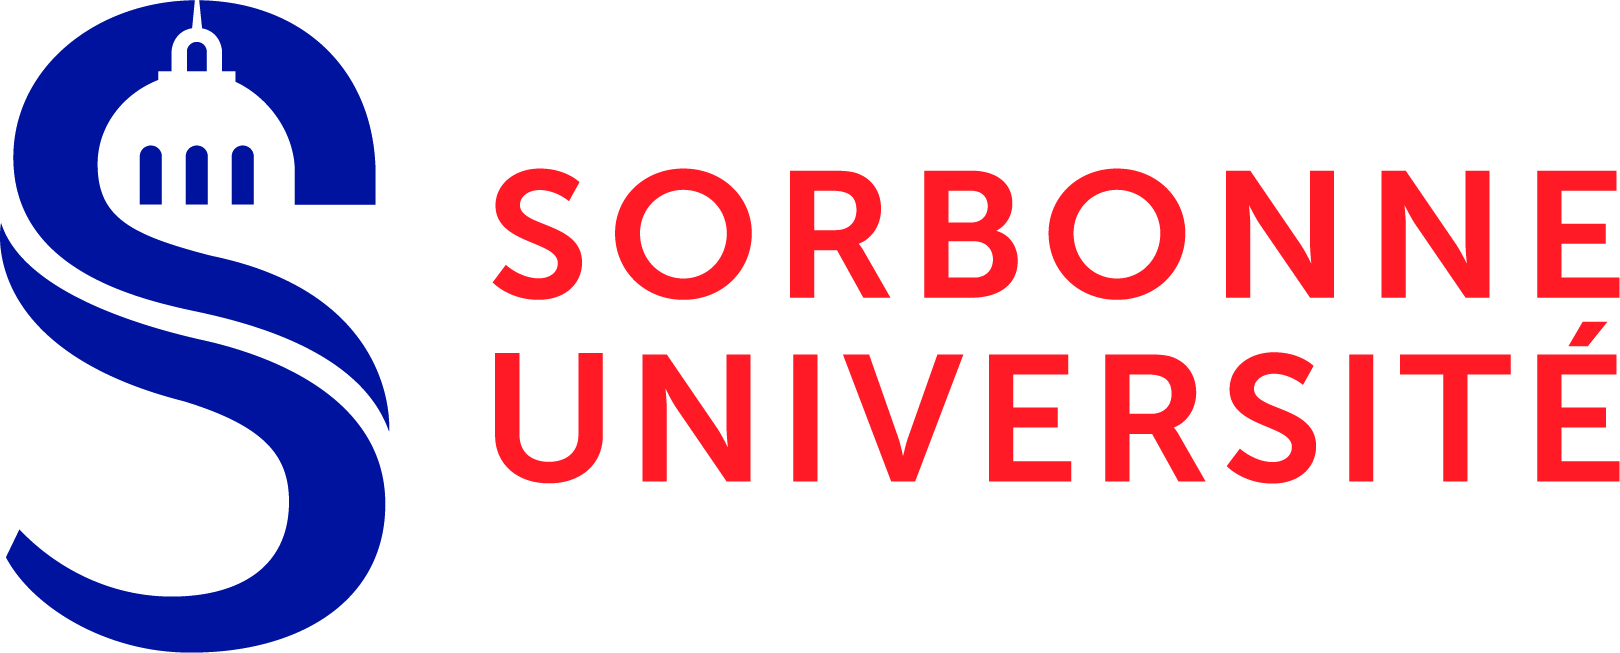 Sorbonne Université - Institutional Sponsor